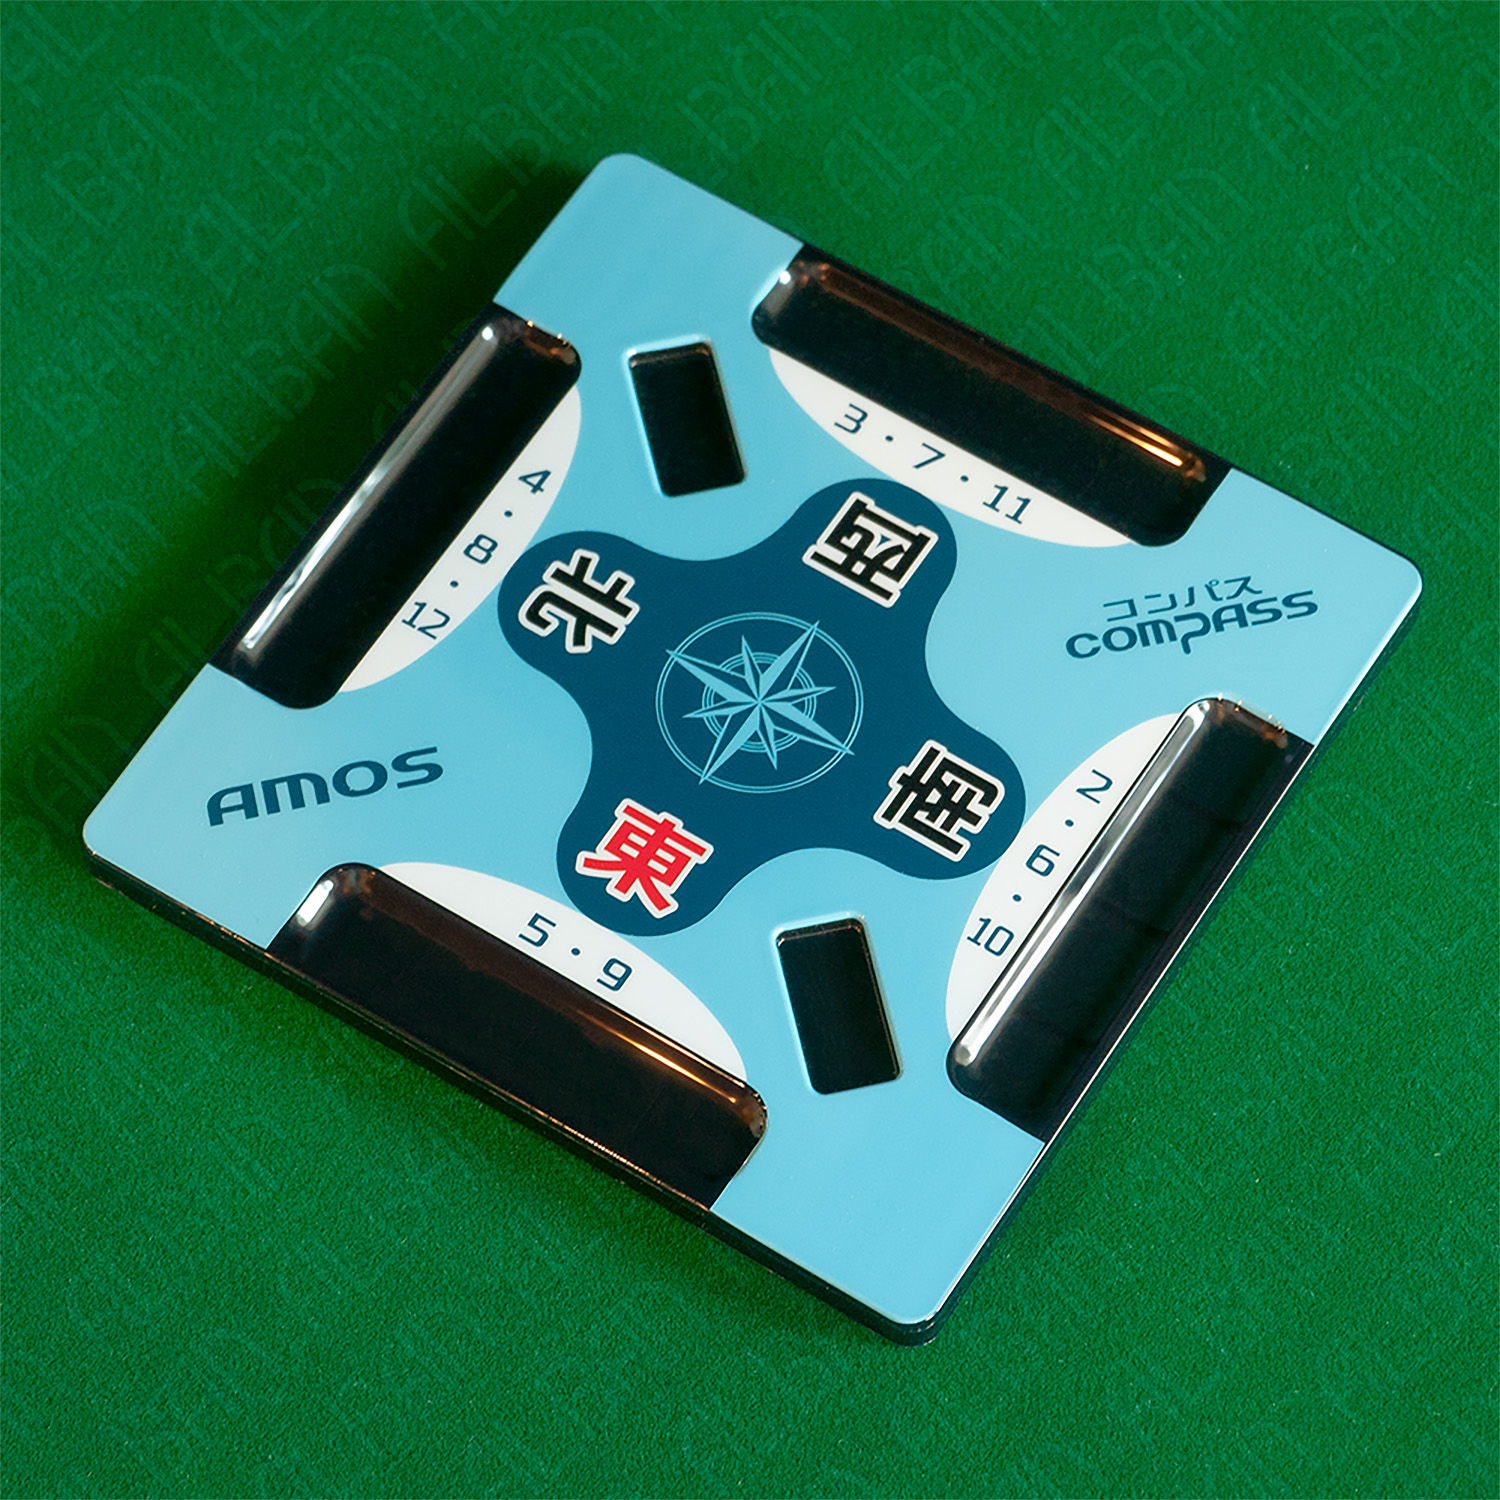 「AMOS COMPASS / アモス コンパス」麻雀サポートプレート